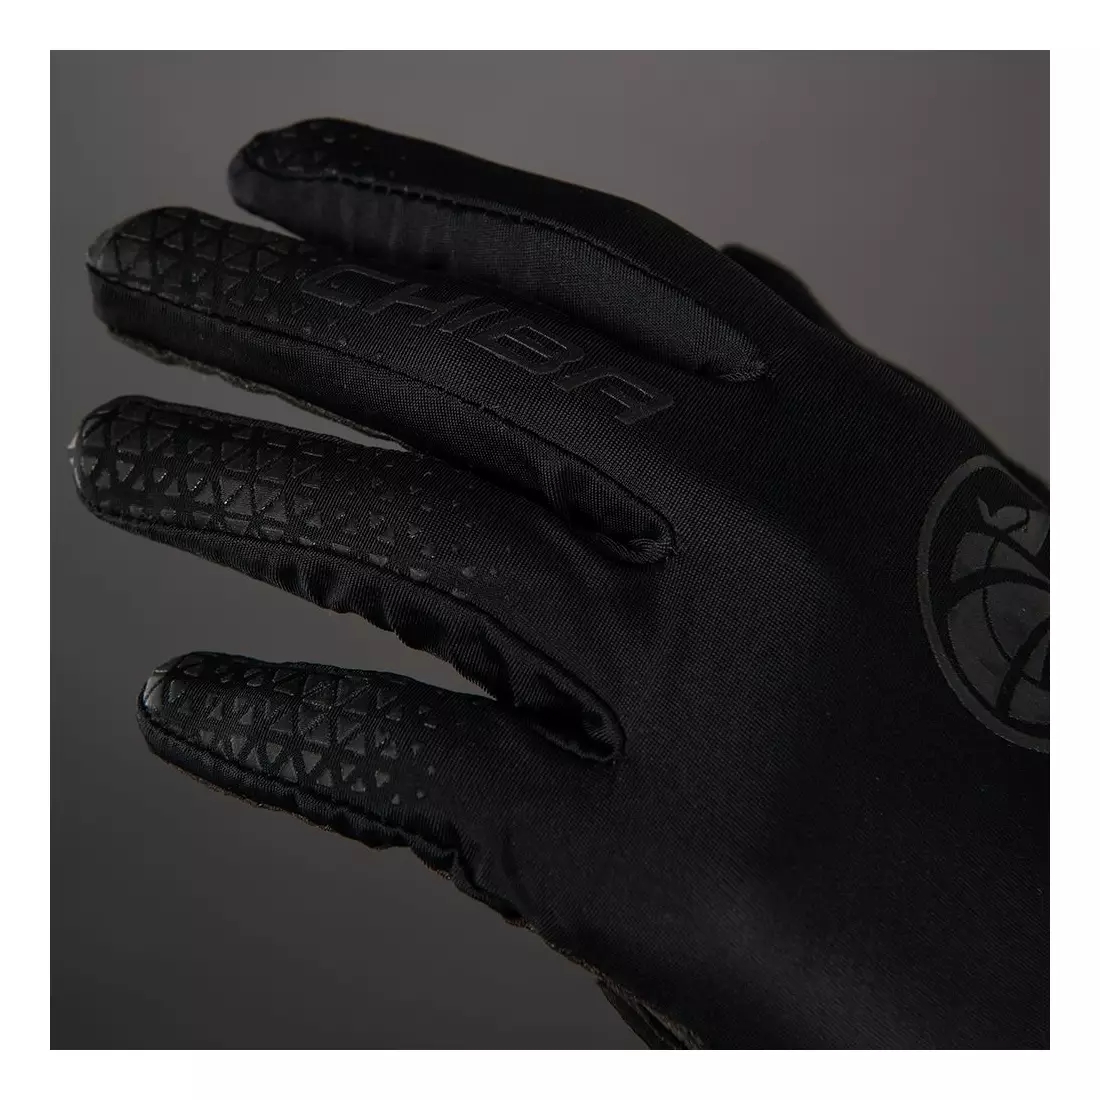 CHIBA BIOXCELL TOURING long bike gloves, black 3060720